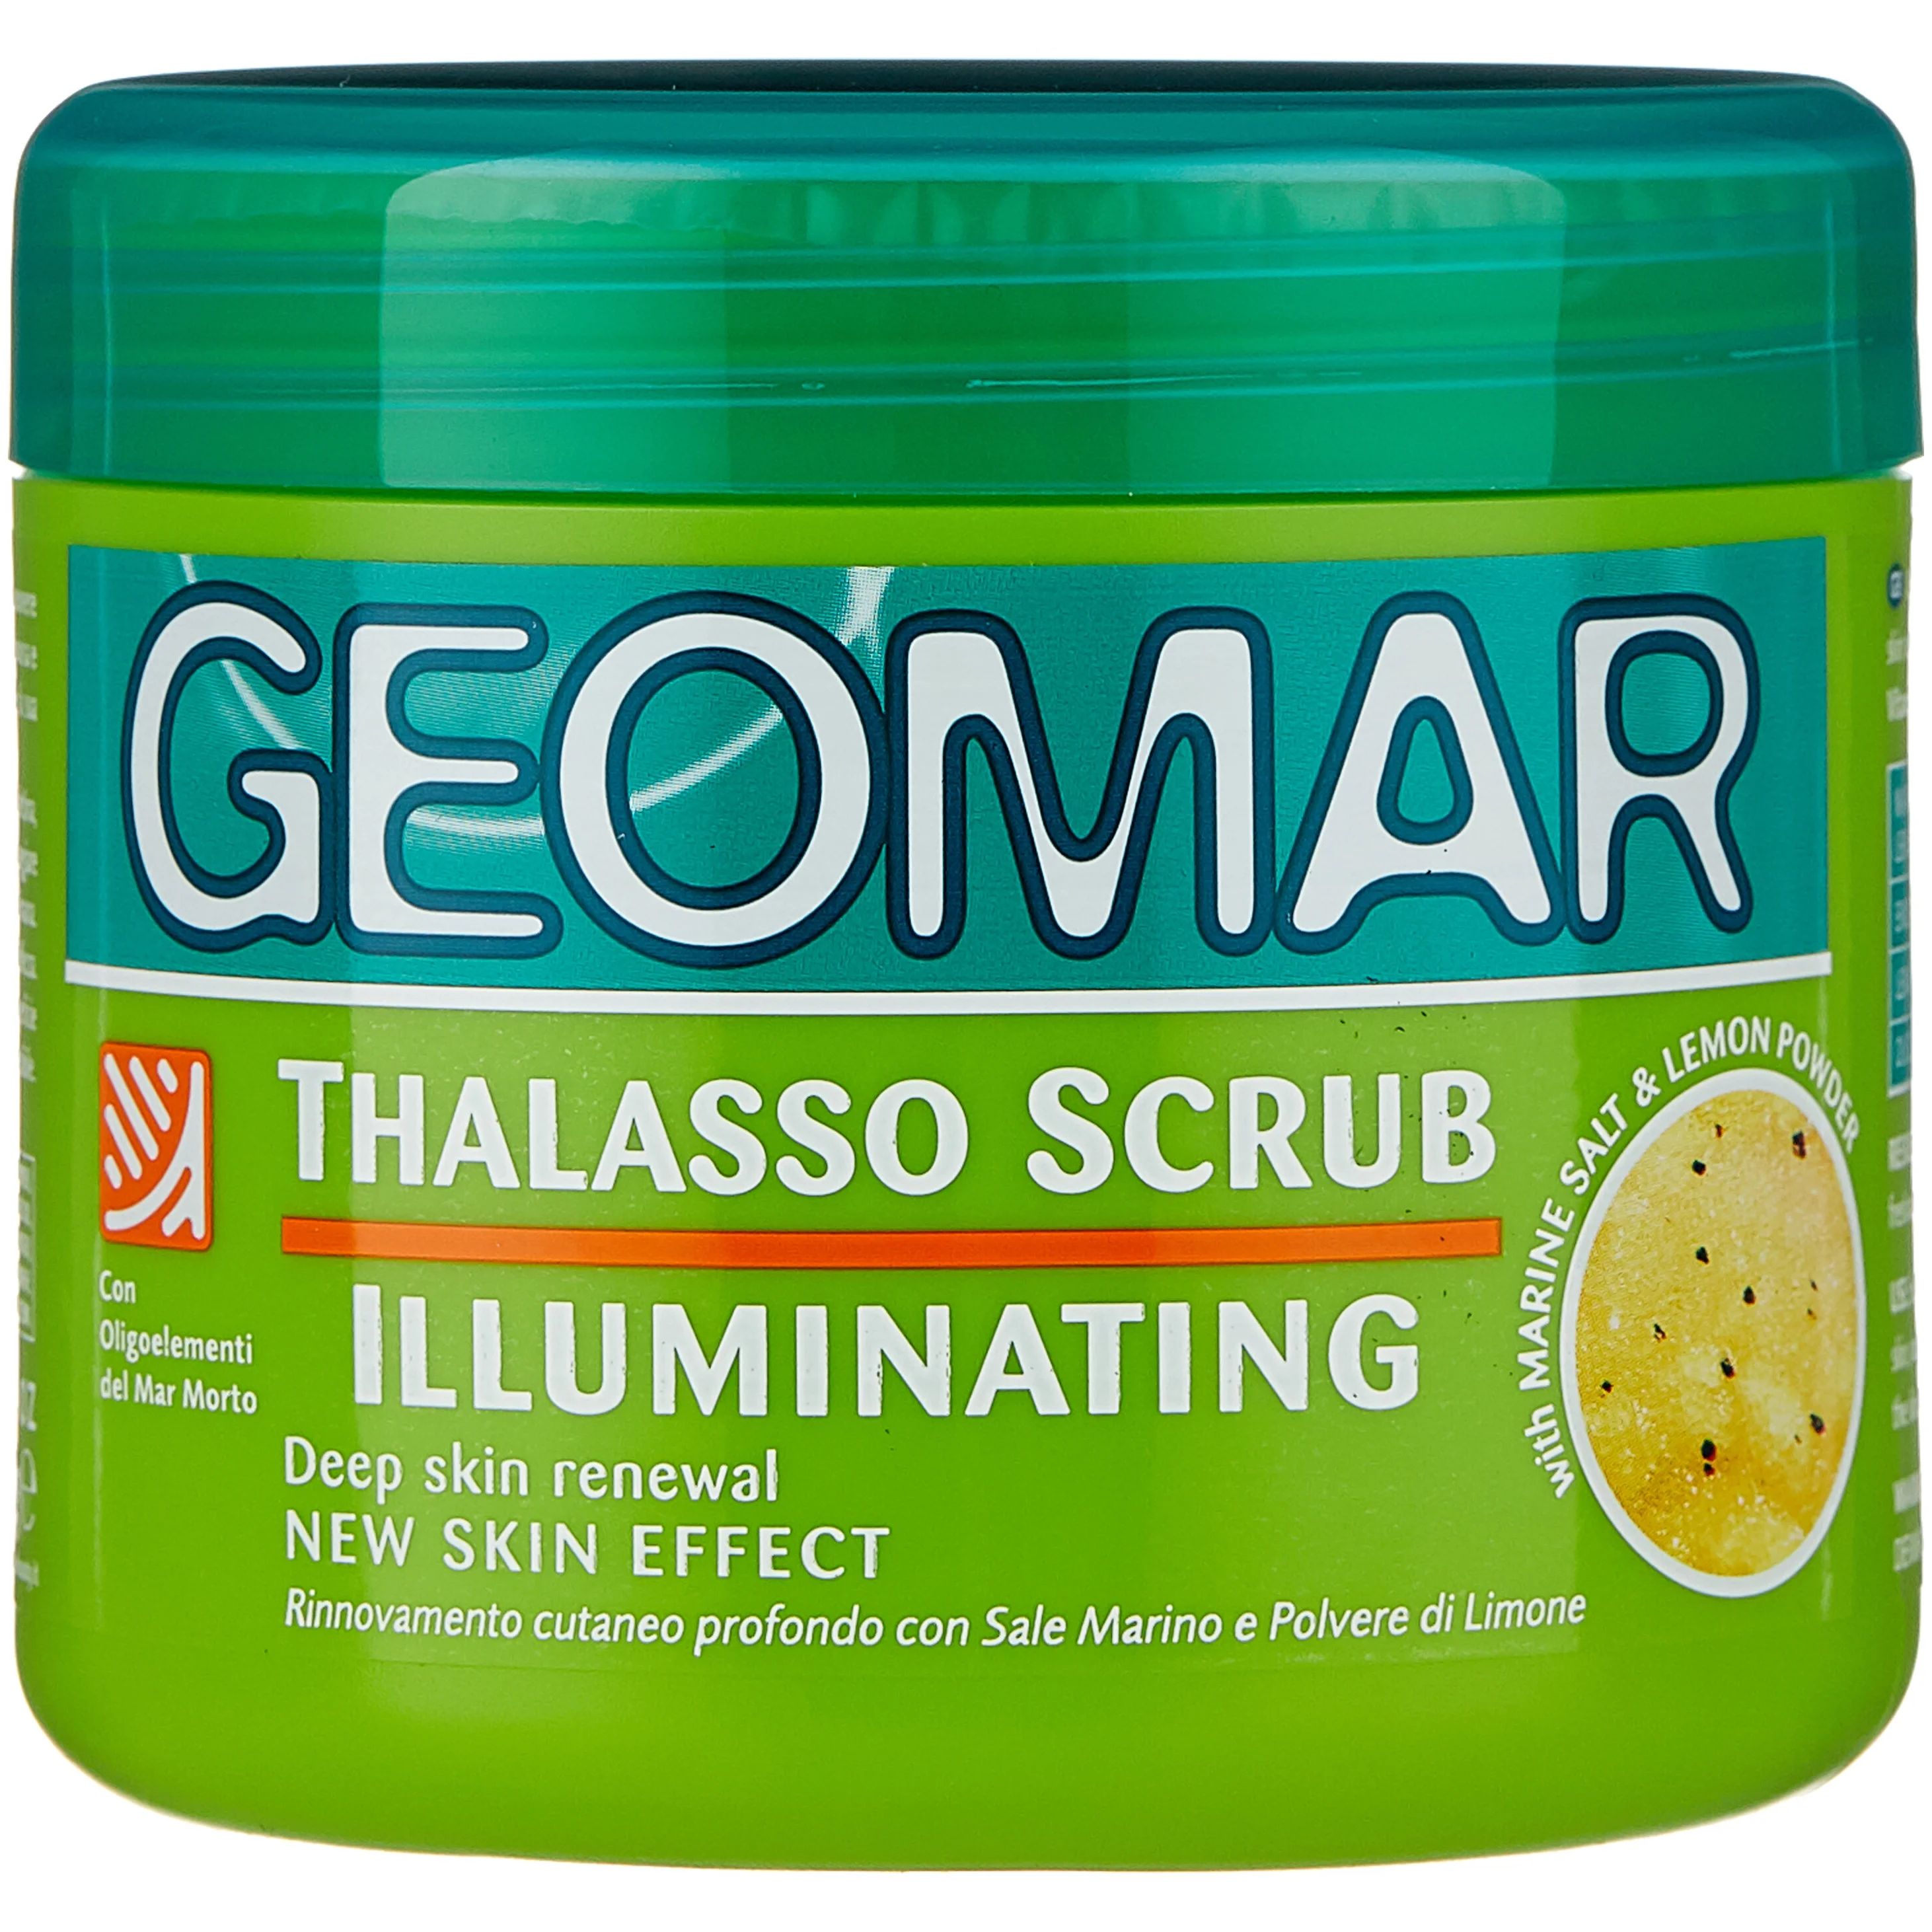 Скраб-талассо для тела Geomar Illuminating лимон 600г geomar талассо скраб моделирующий с гранулами кофе 600